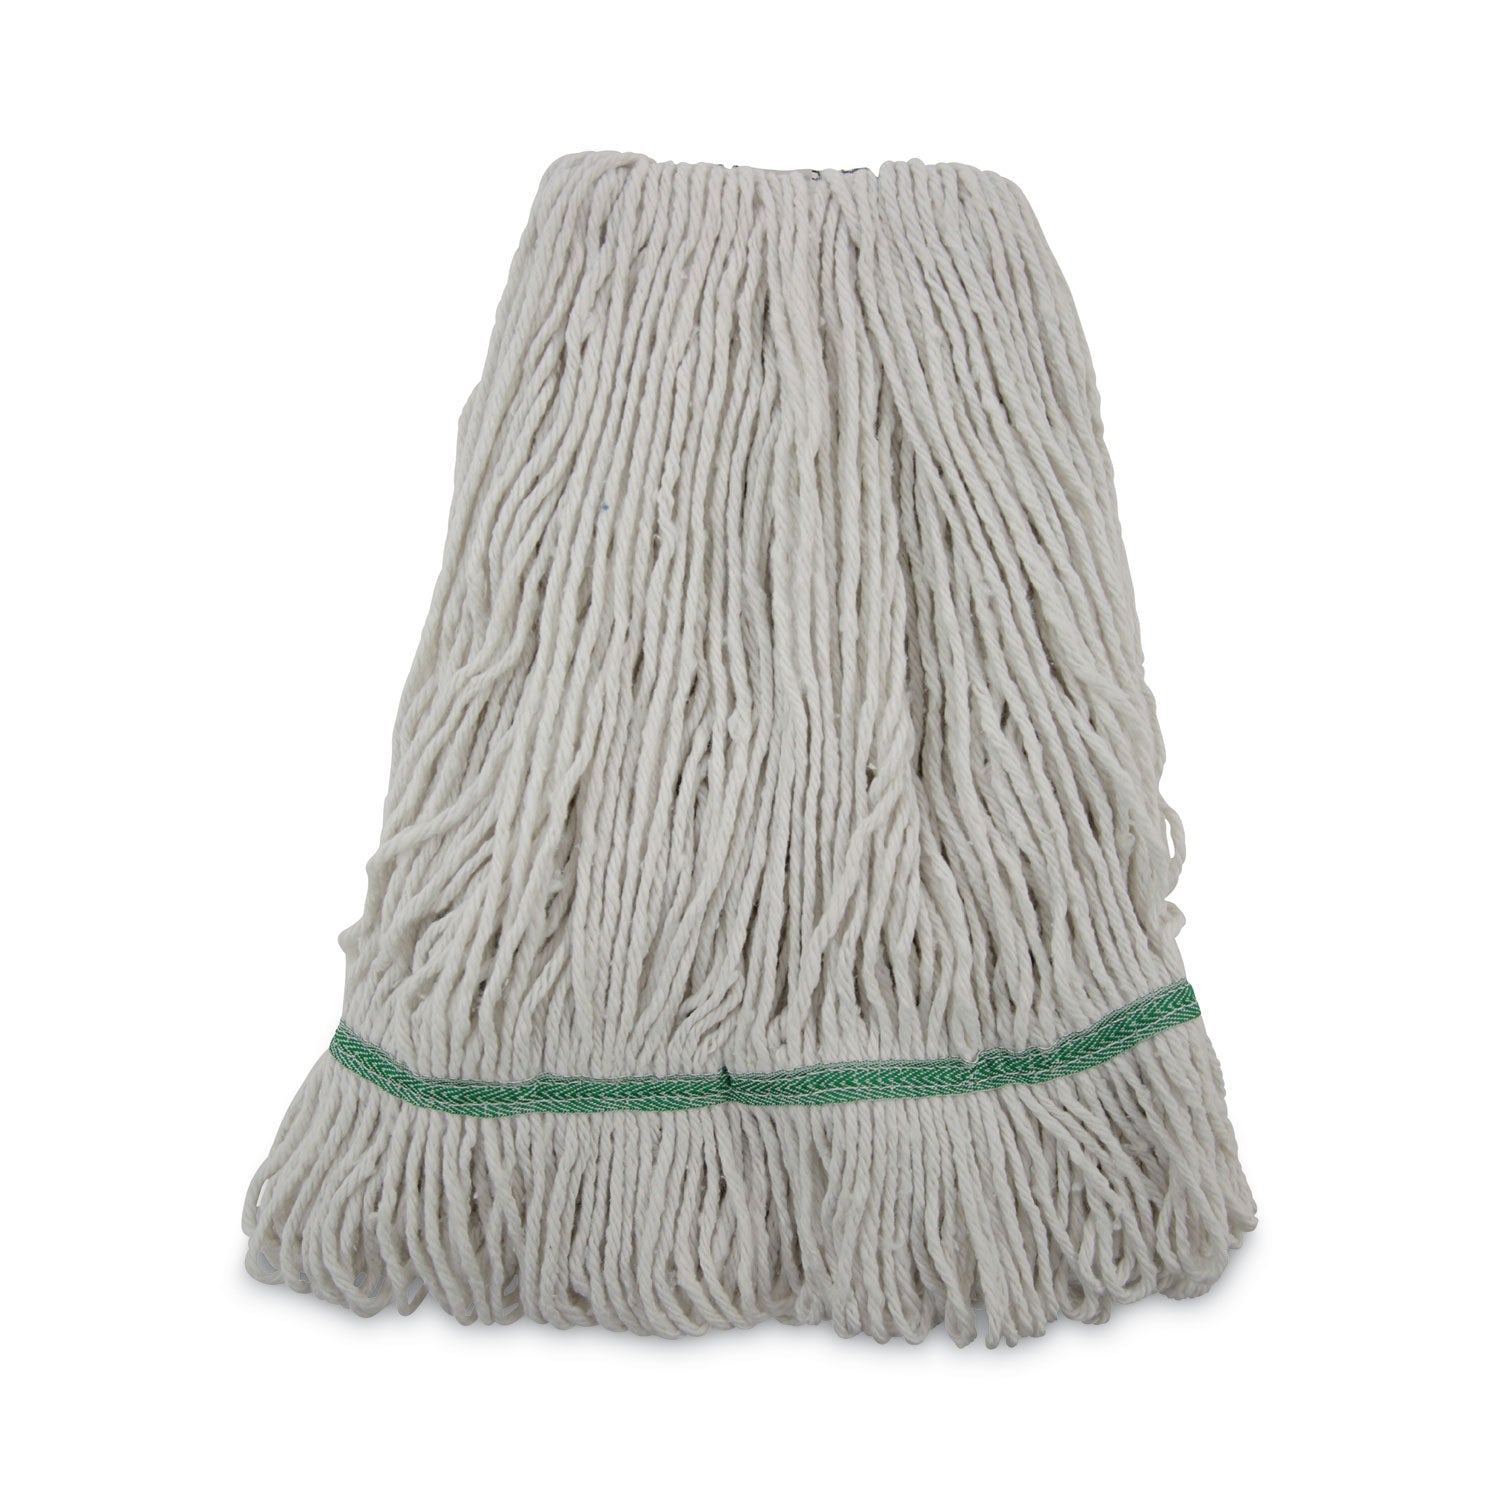 mop-head-premium-standard-head-cotton-rayon-fiber-medium-white_bwk502whnb - 1